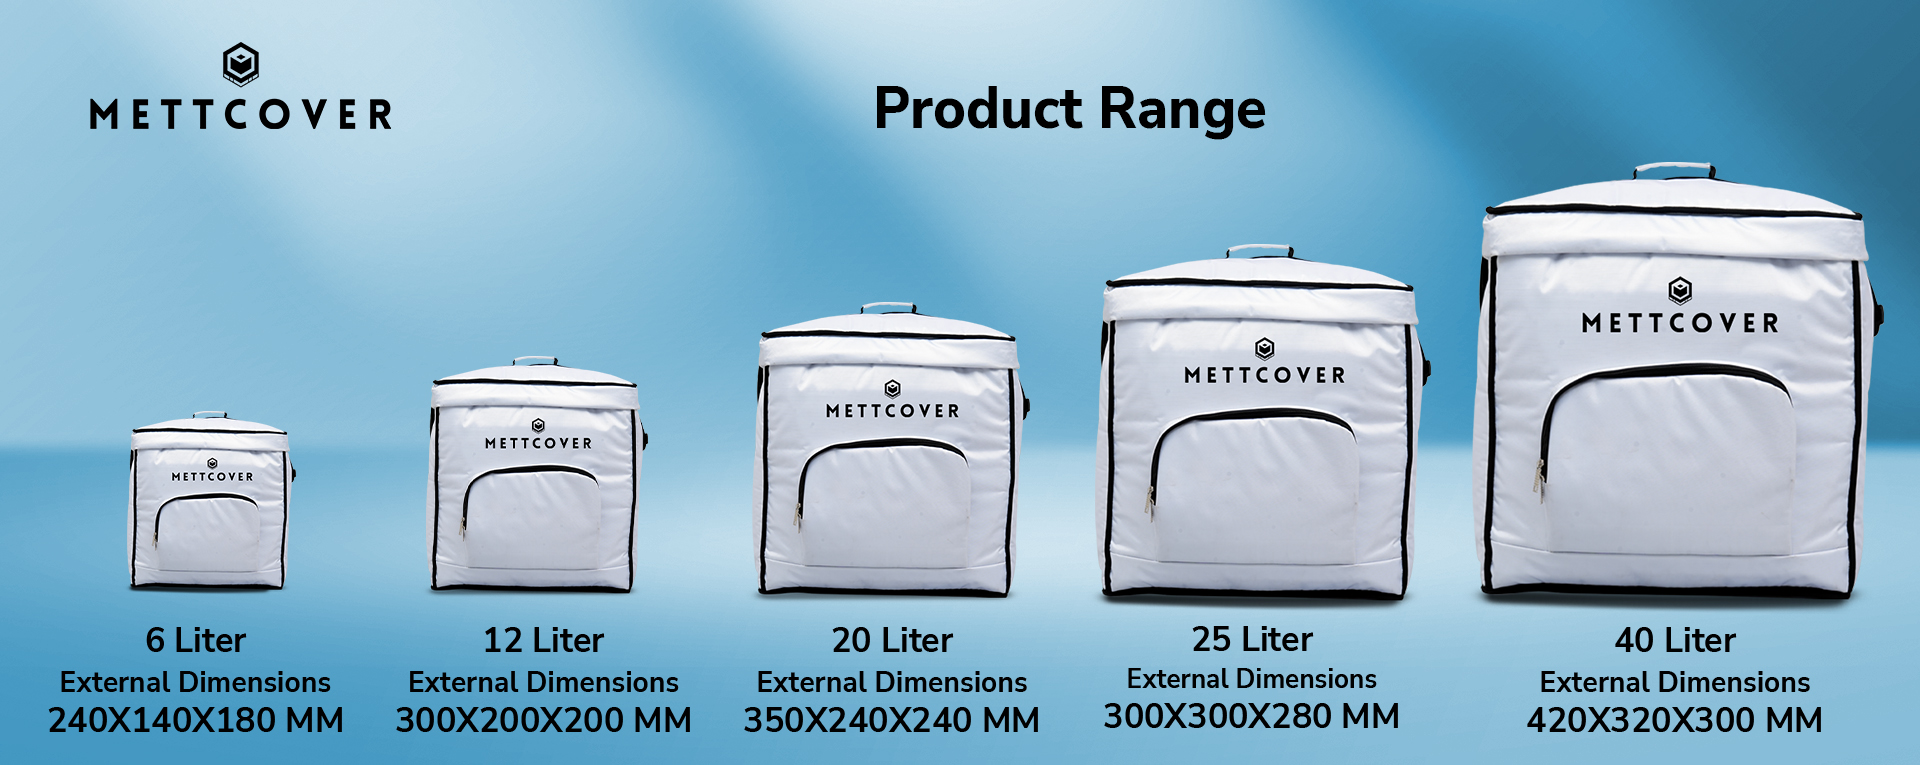 Mettcover Cooler Bag size range.